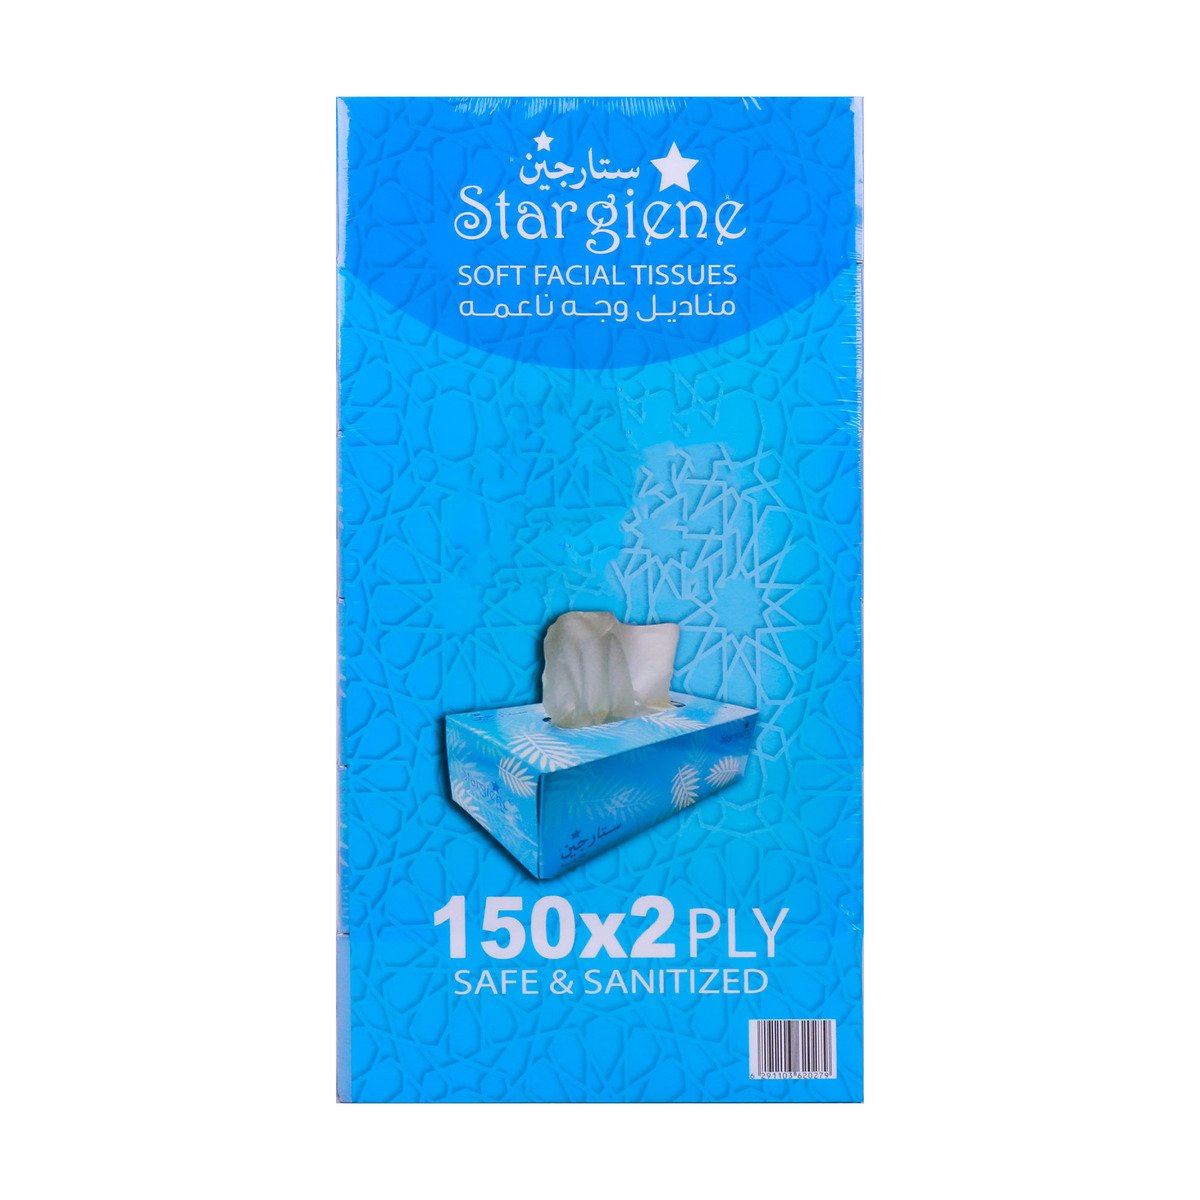 Stargiene Soft Facial Tissues 2ply 150 Sheets